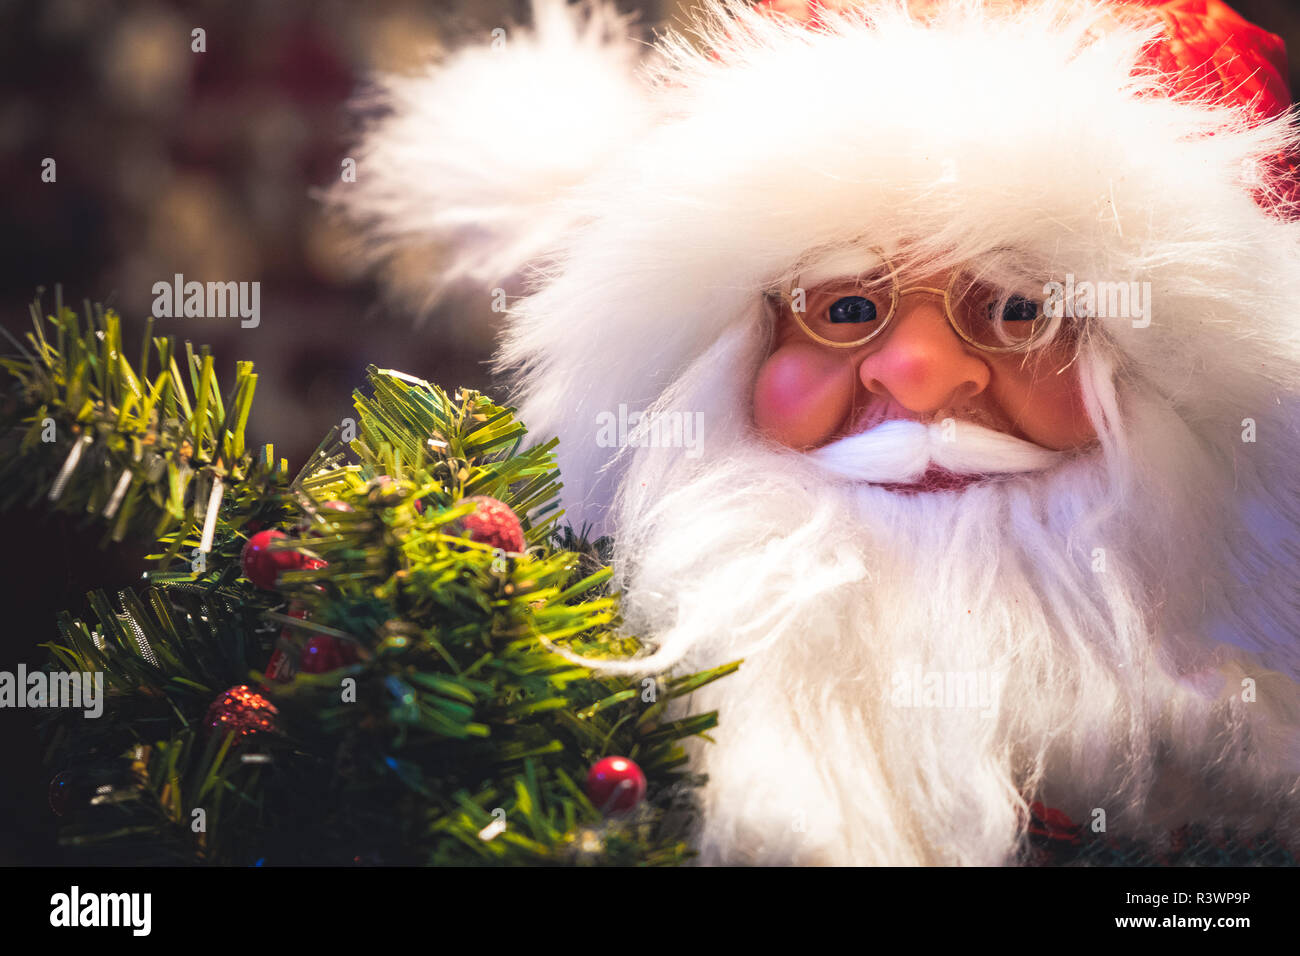 santa claus with glasses portrait closeup expression puppet Stock Photo